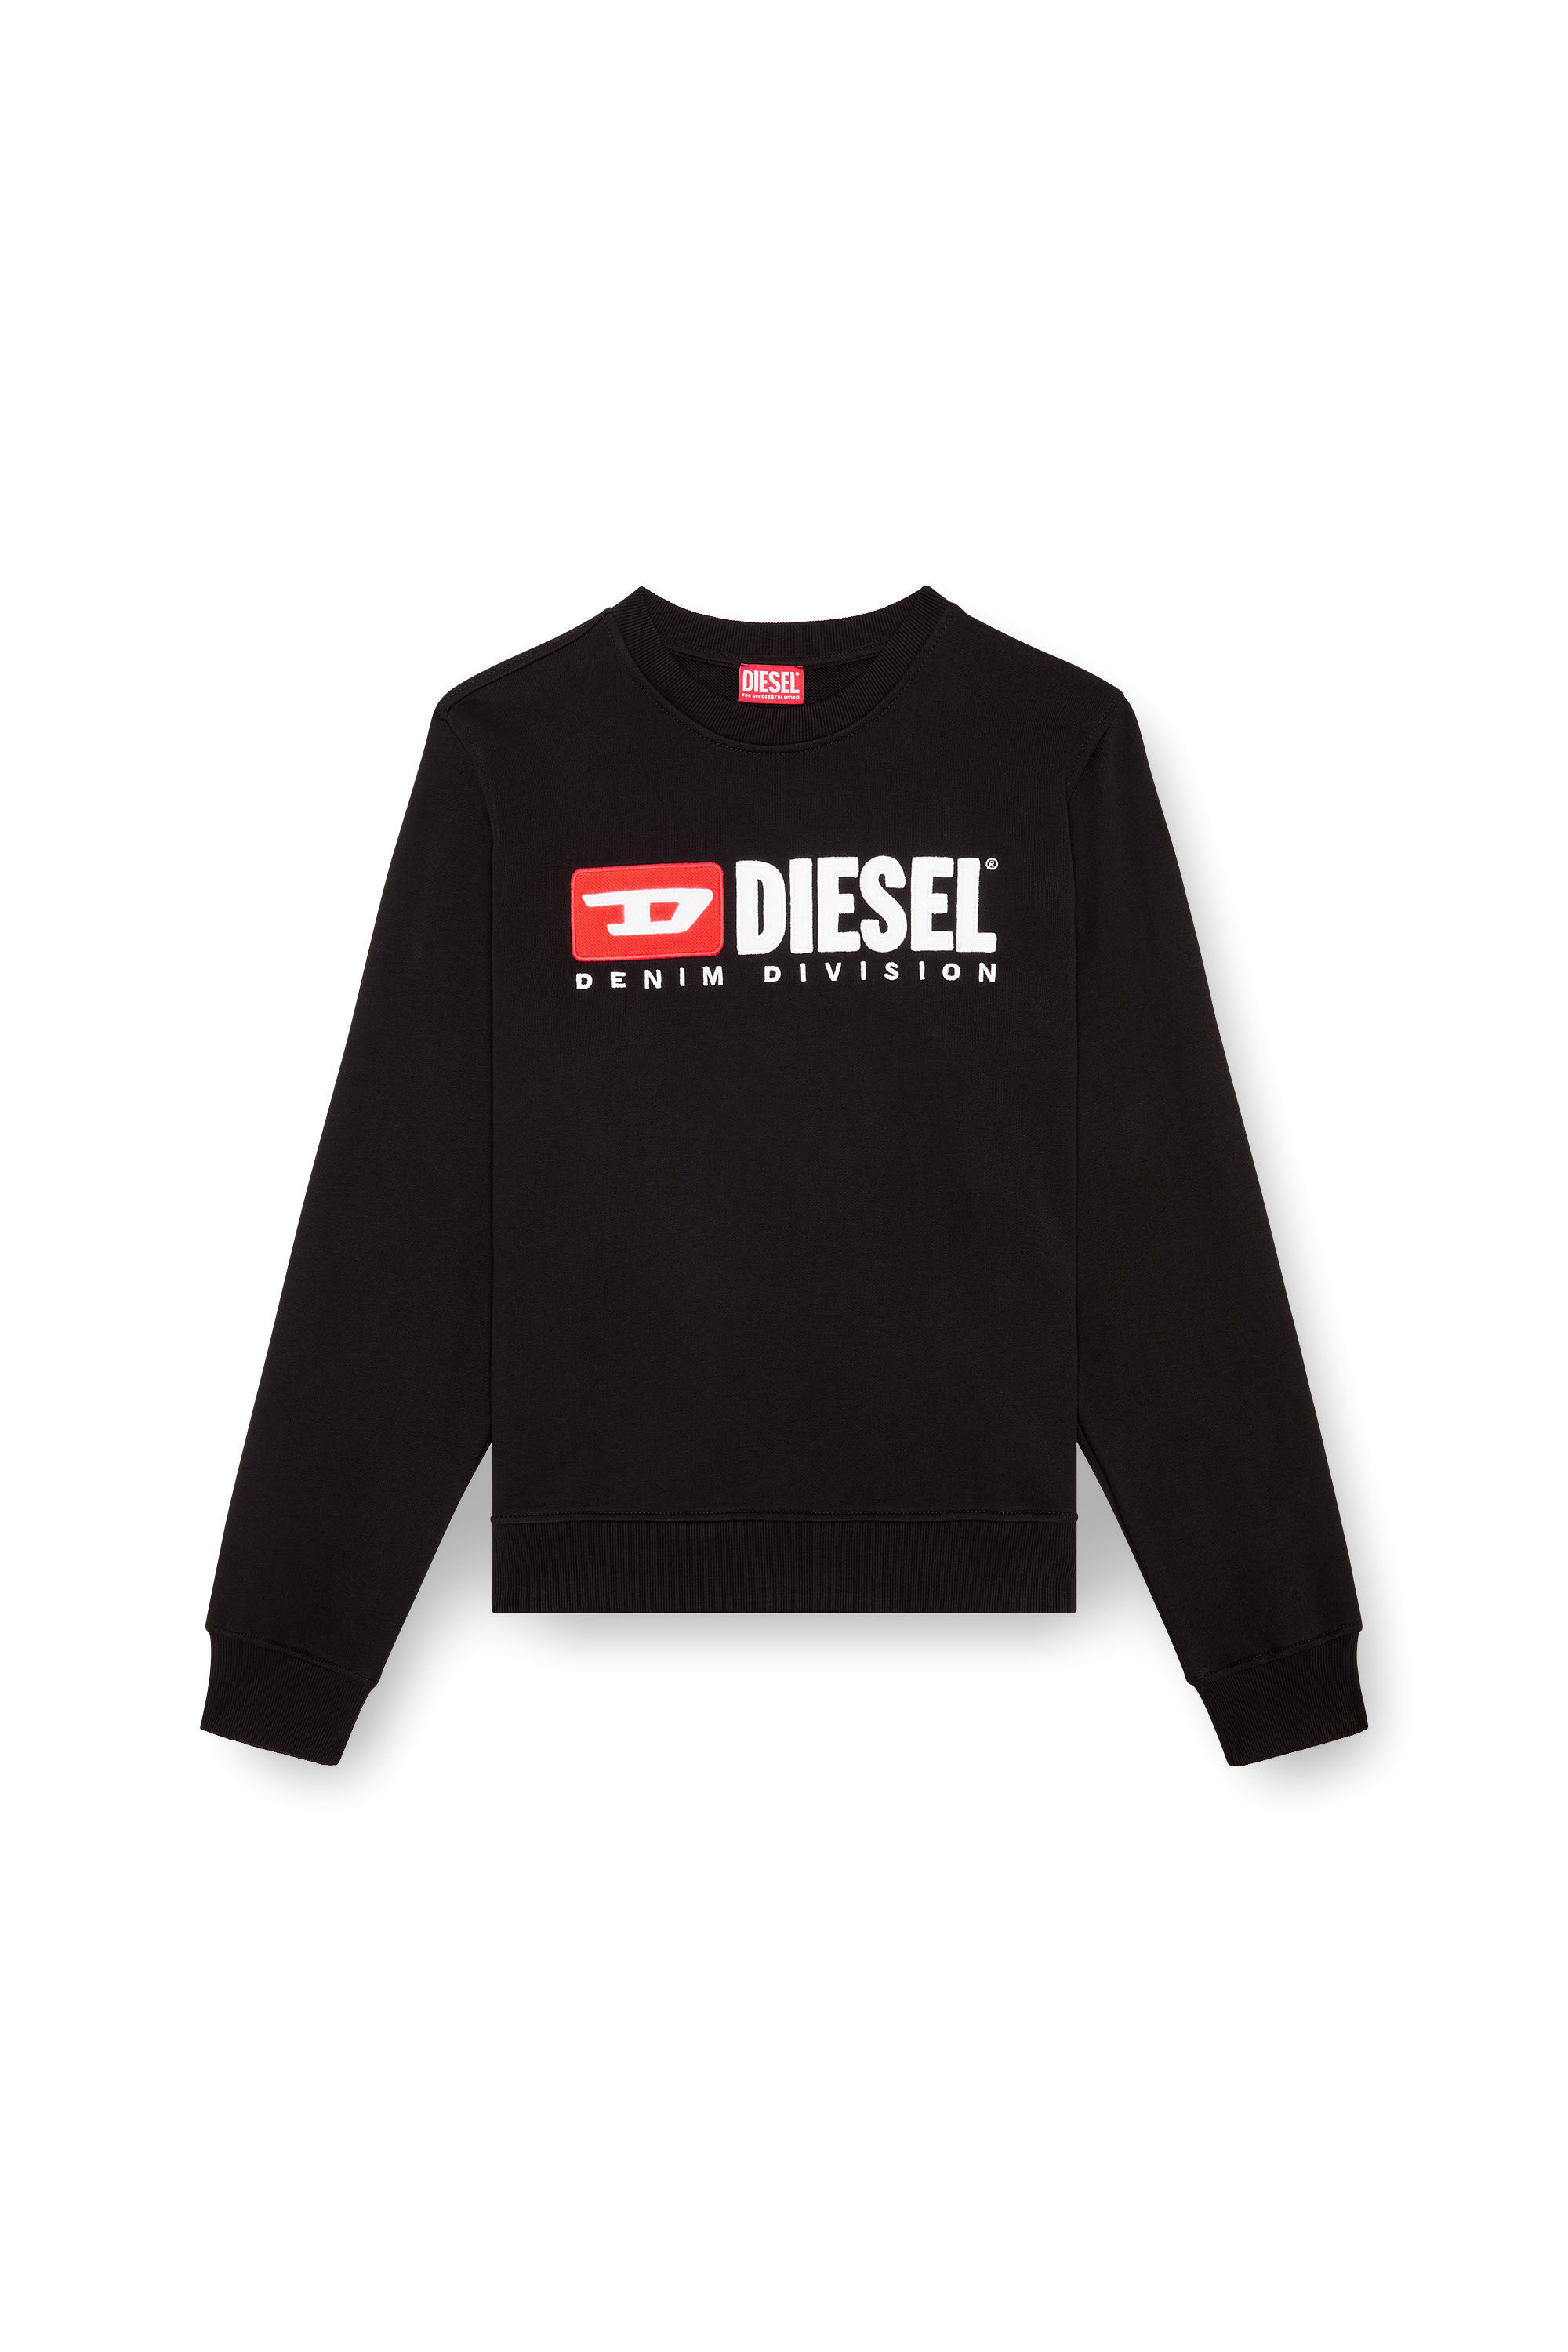 Diesel - S-BOXT-DIV, Man Sweatshirt with Denim Division logo in Black - Image 2